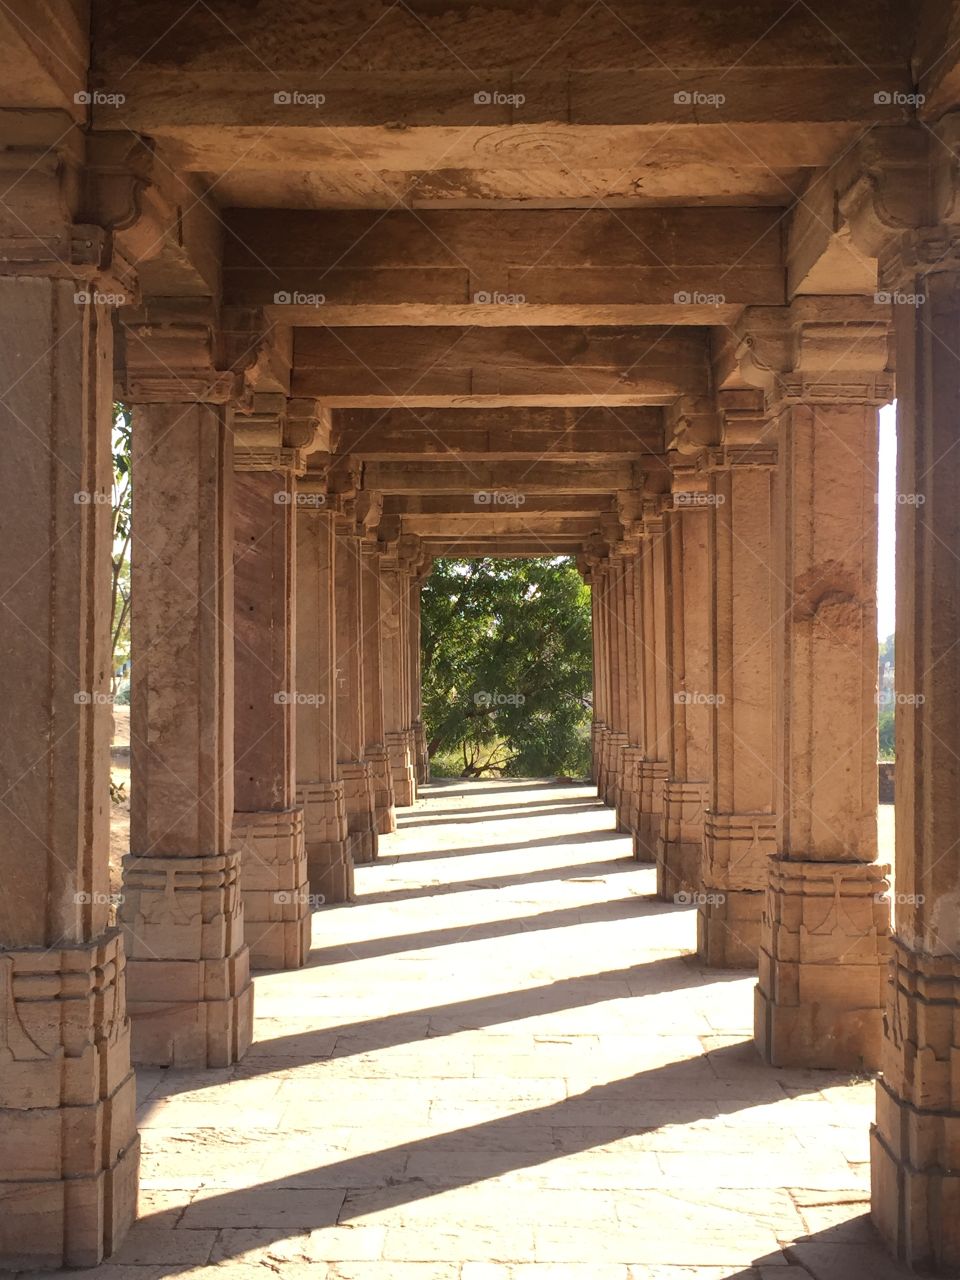 #perspective #local architecture #exploremore #travelmore #truecolors #sarkhejroza #ahmedabaddiaries 